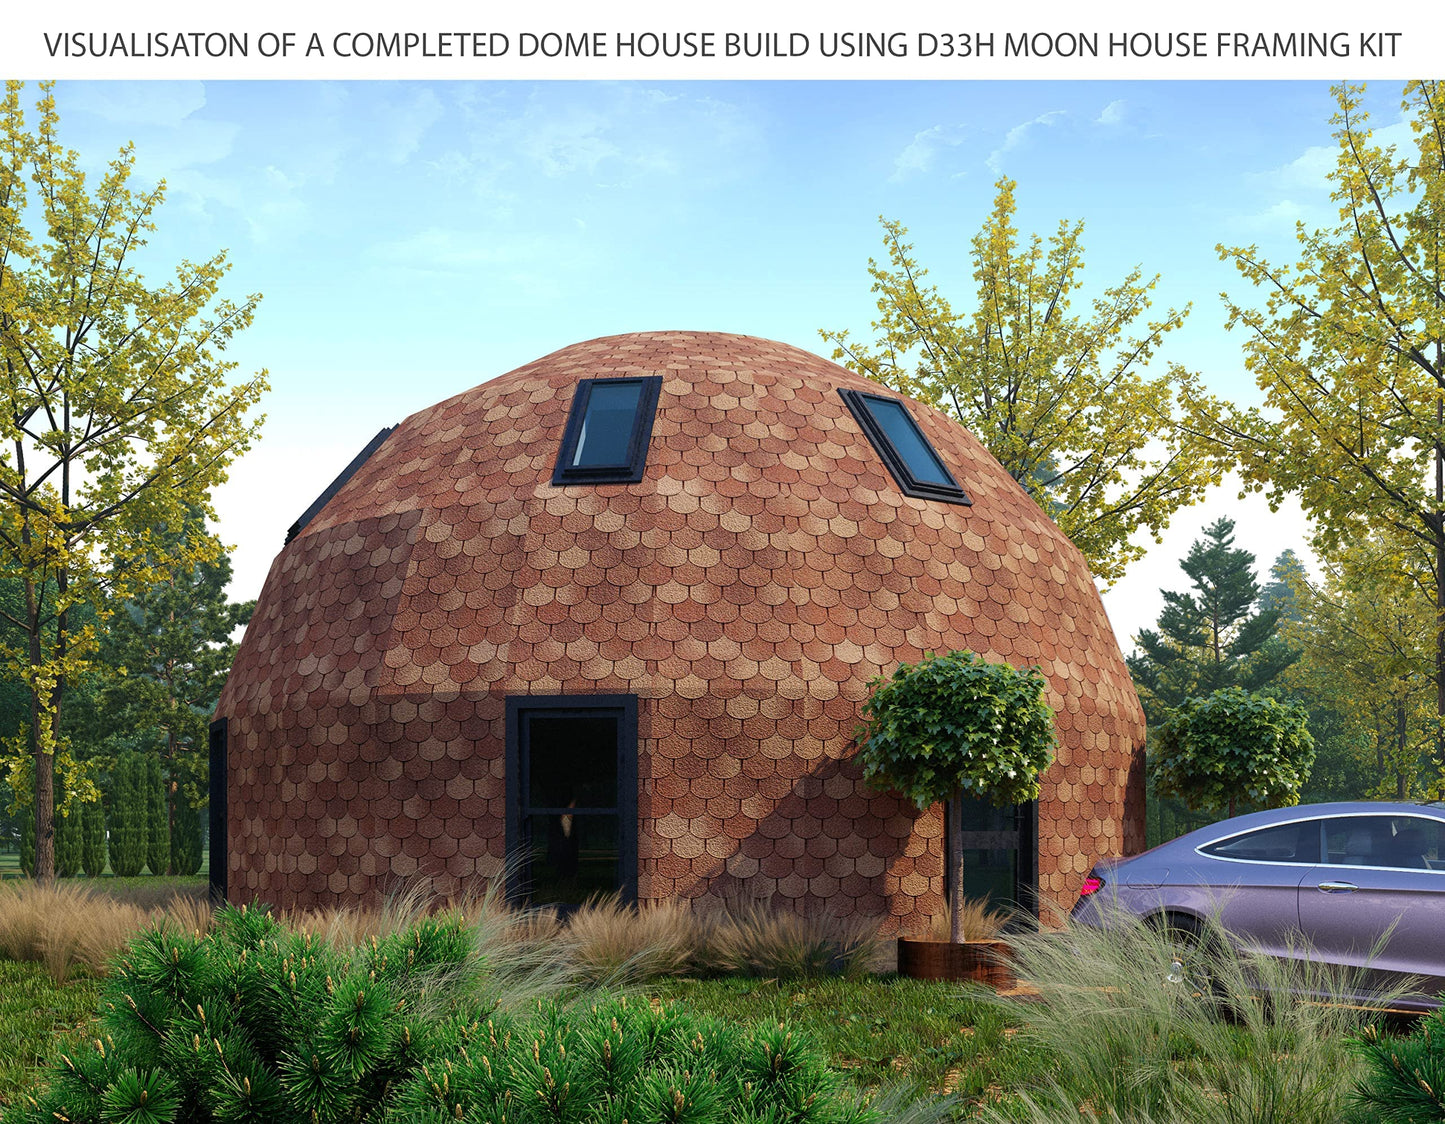 ECOHOUSEMART Moon House 33' DIAM Dome FRAMING KIT D33H-986, Dark brown